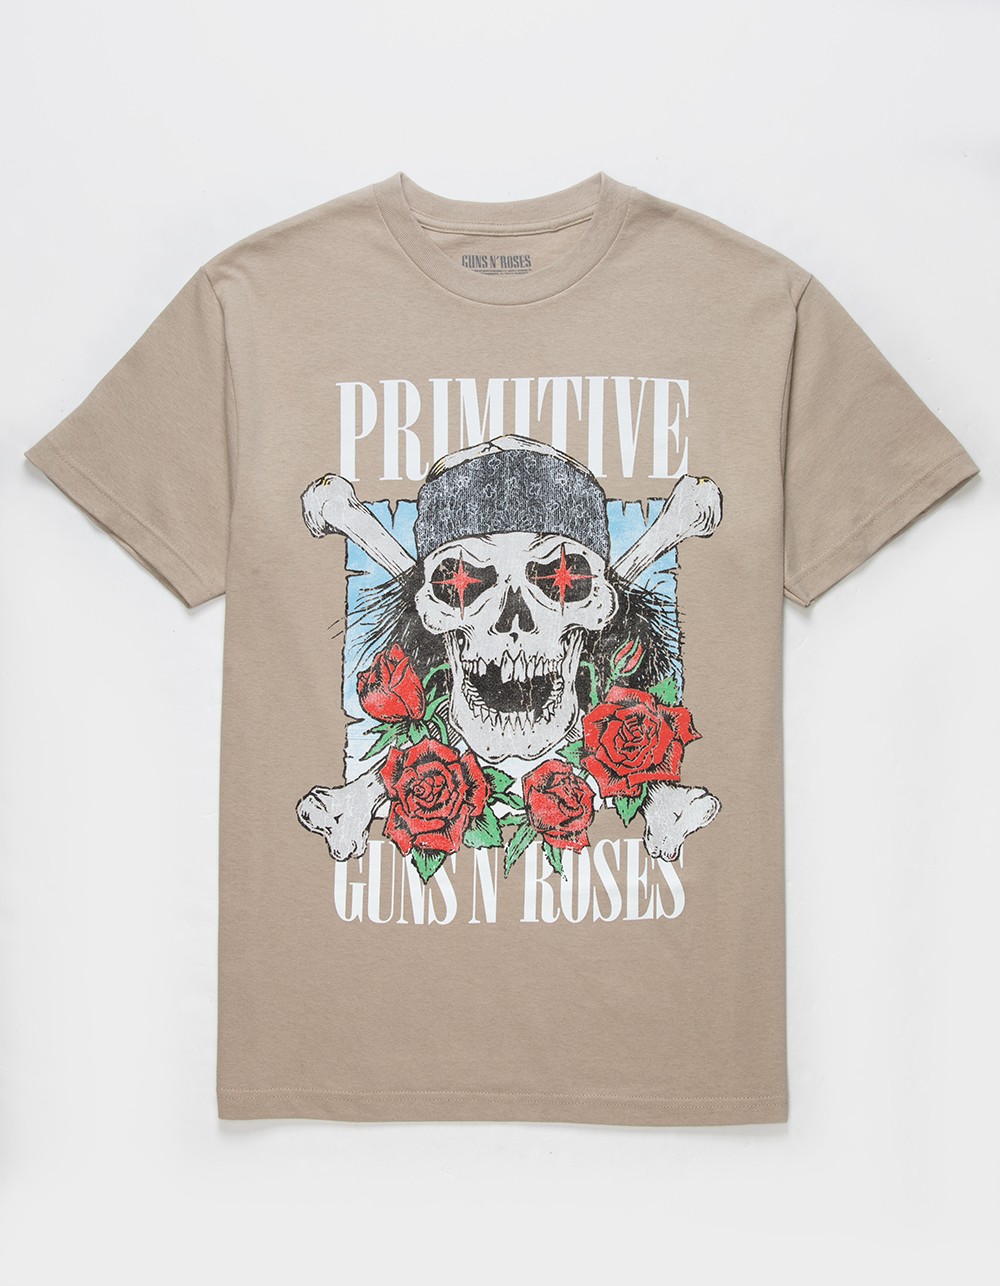 PRIMITIVE x Guns N' Roses Streets Mens Tee - SAND | Tillys